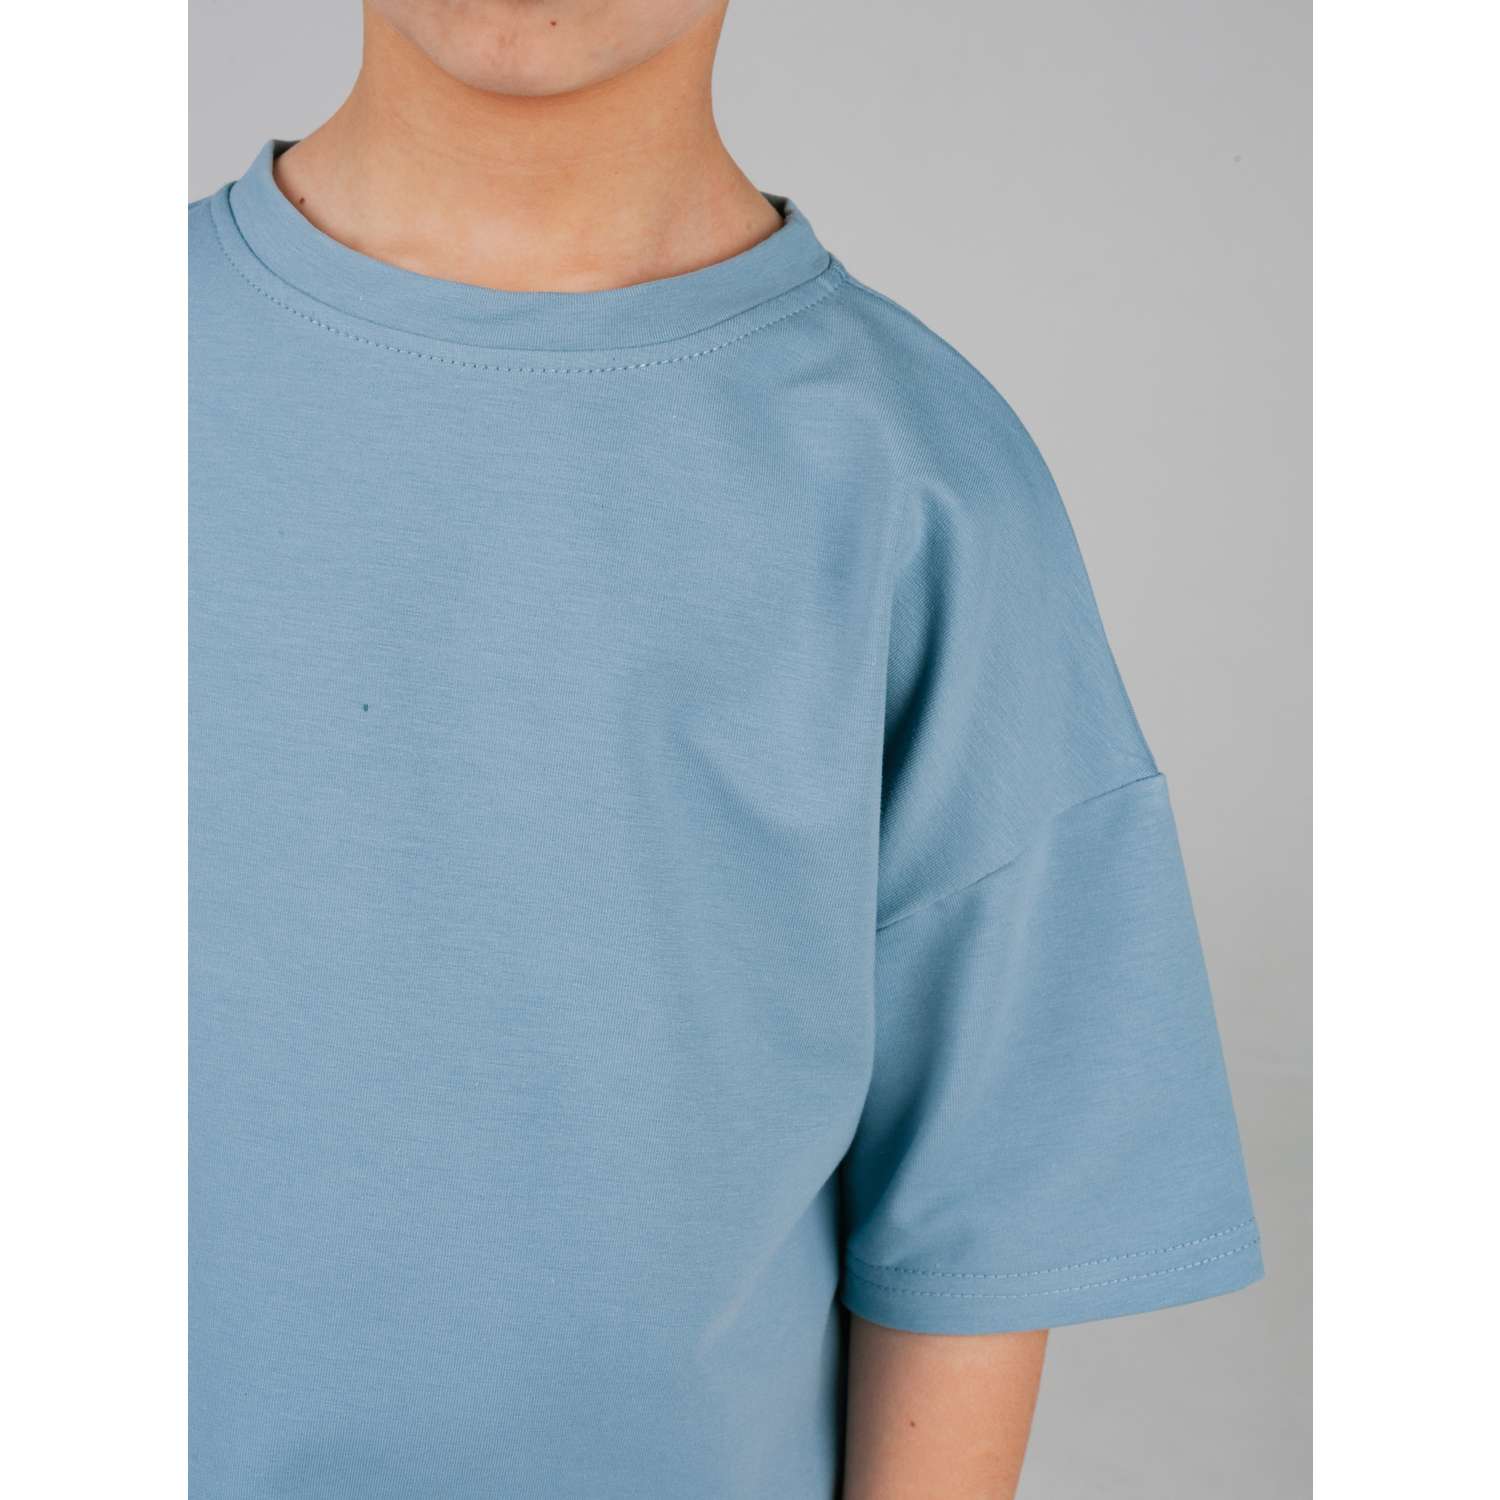 Костюм Cottonstory 250422-шорты/футболка/оверсйзAG-серо-голубой - фото 4